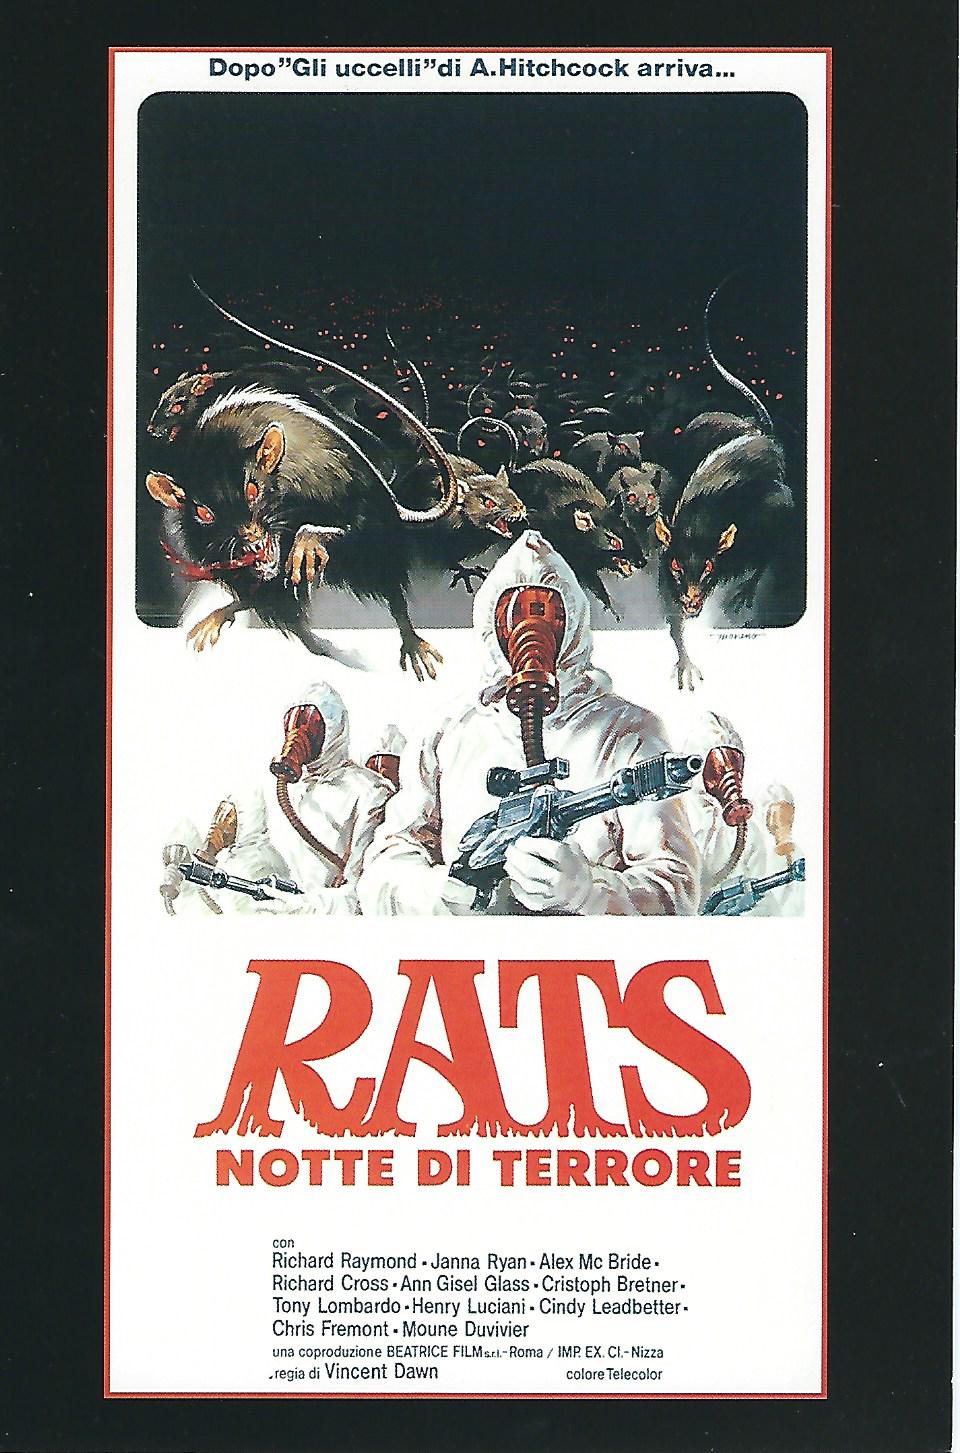 Rats Night of Terror poster